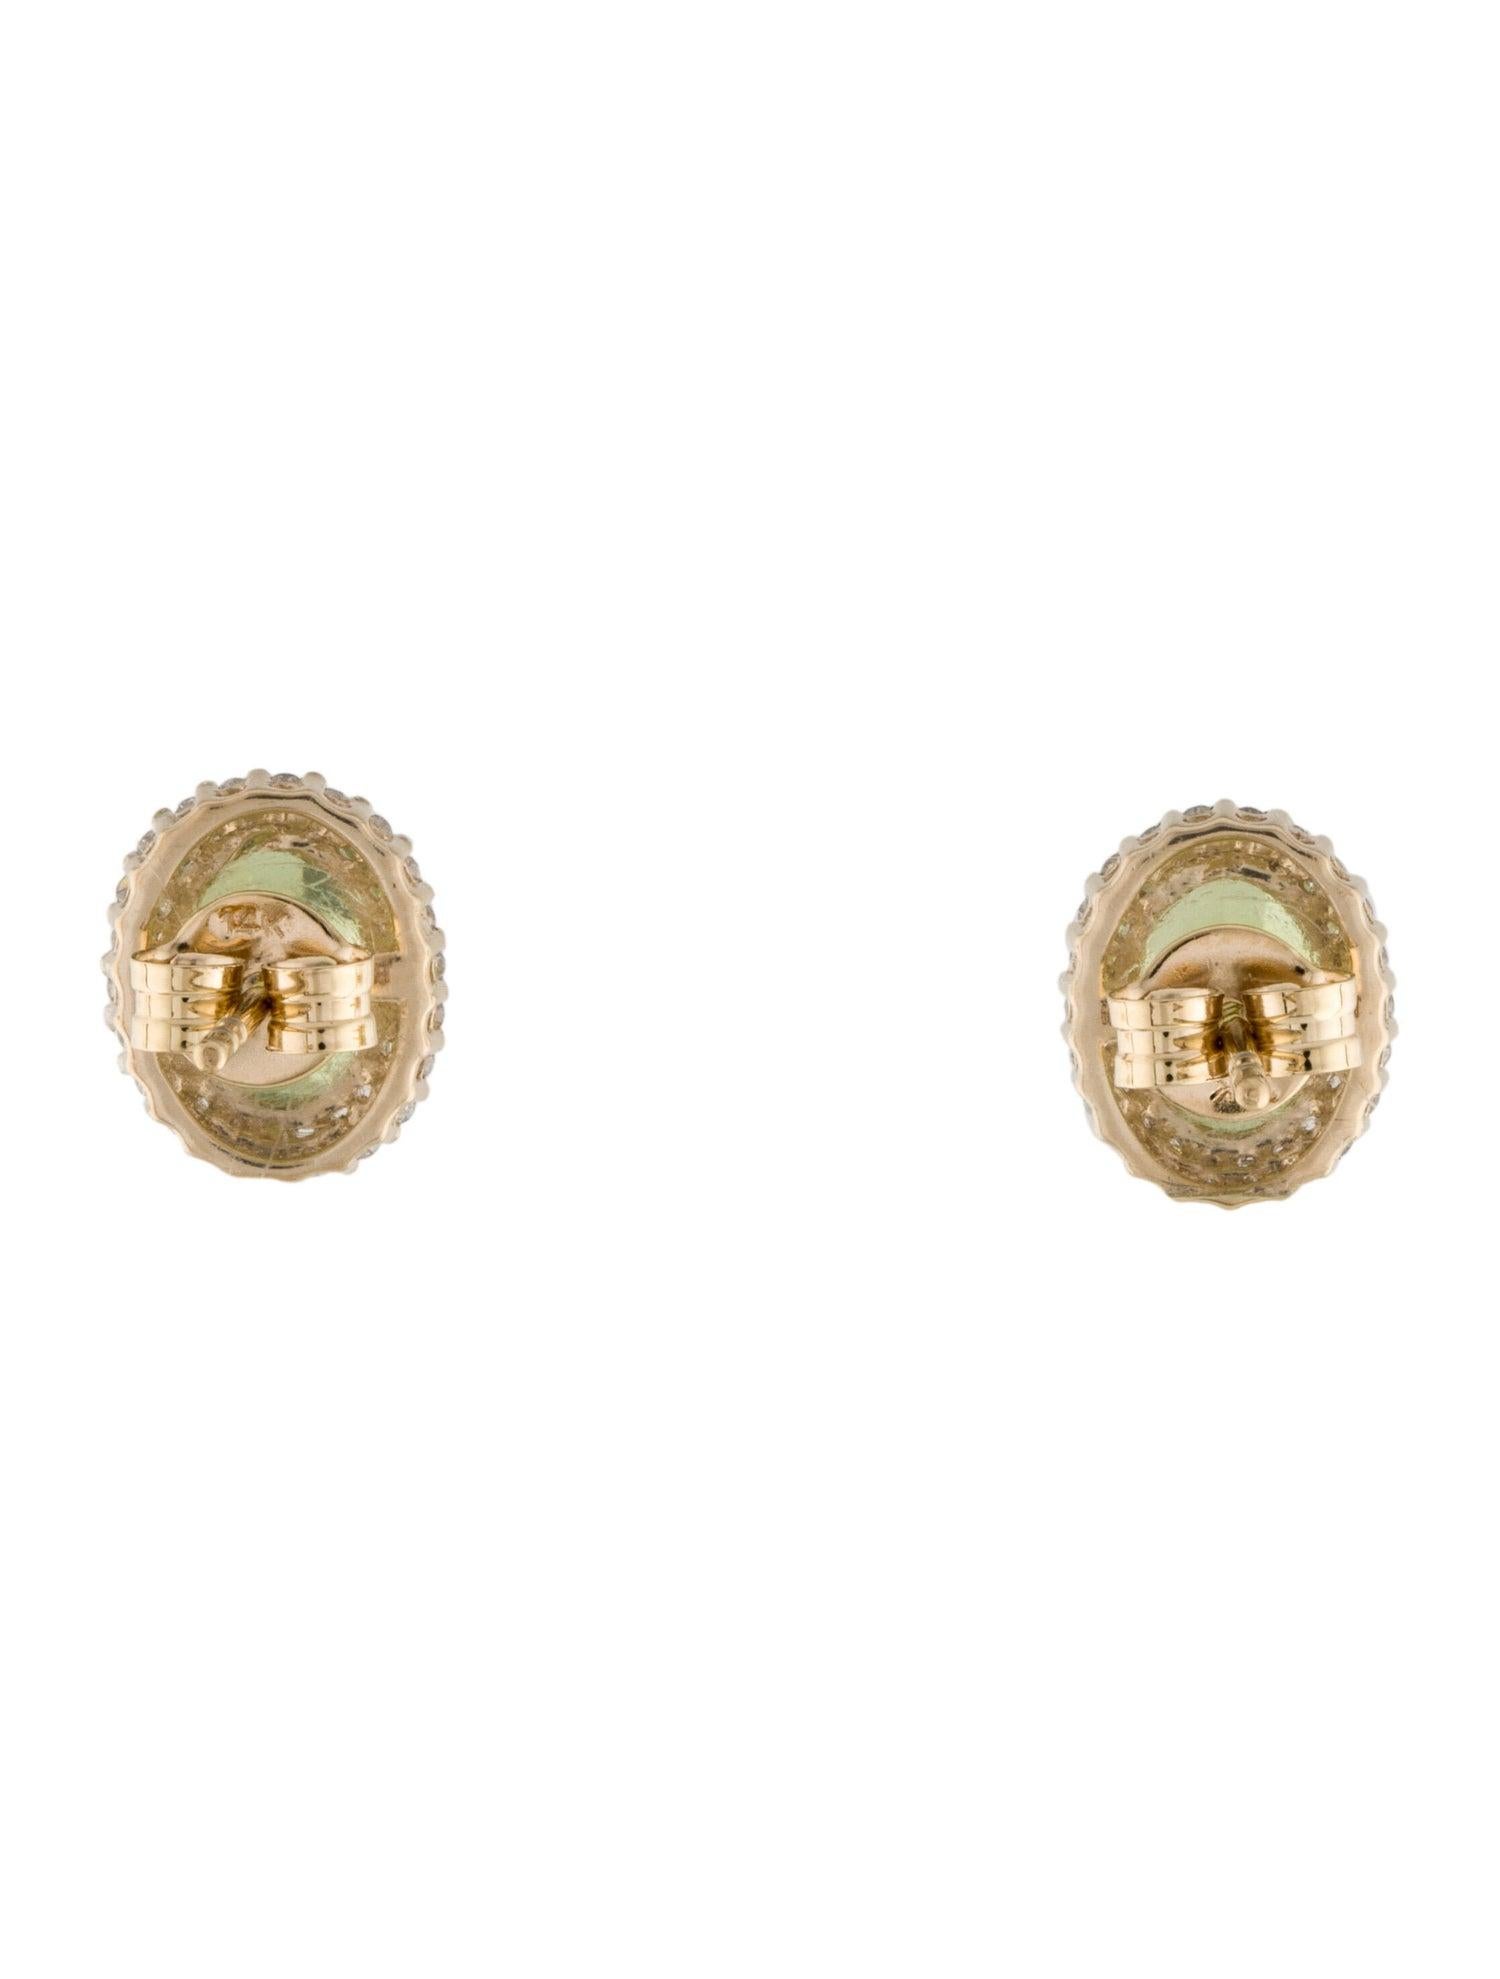 Brilliant Cut Chic 14K Peridot & 7 Diamond Studs - Elegant Gemstone Jewelry Collection For Sale